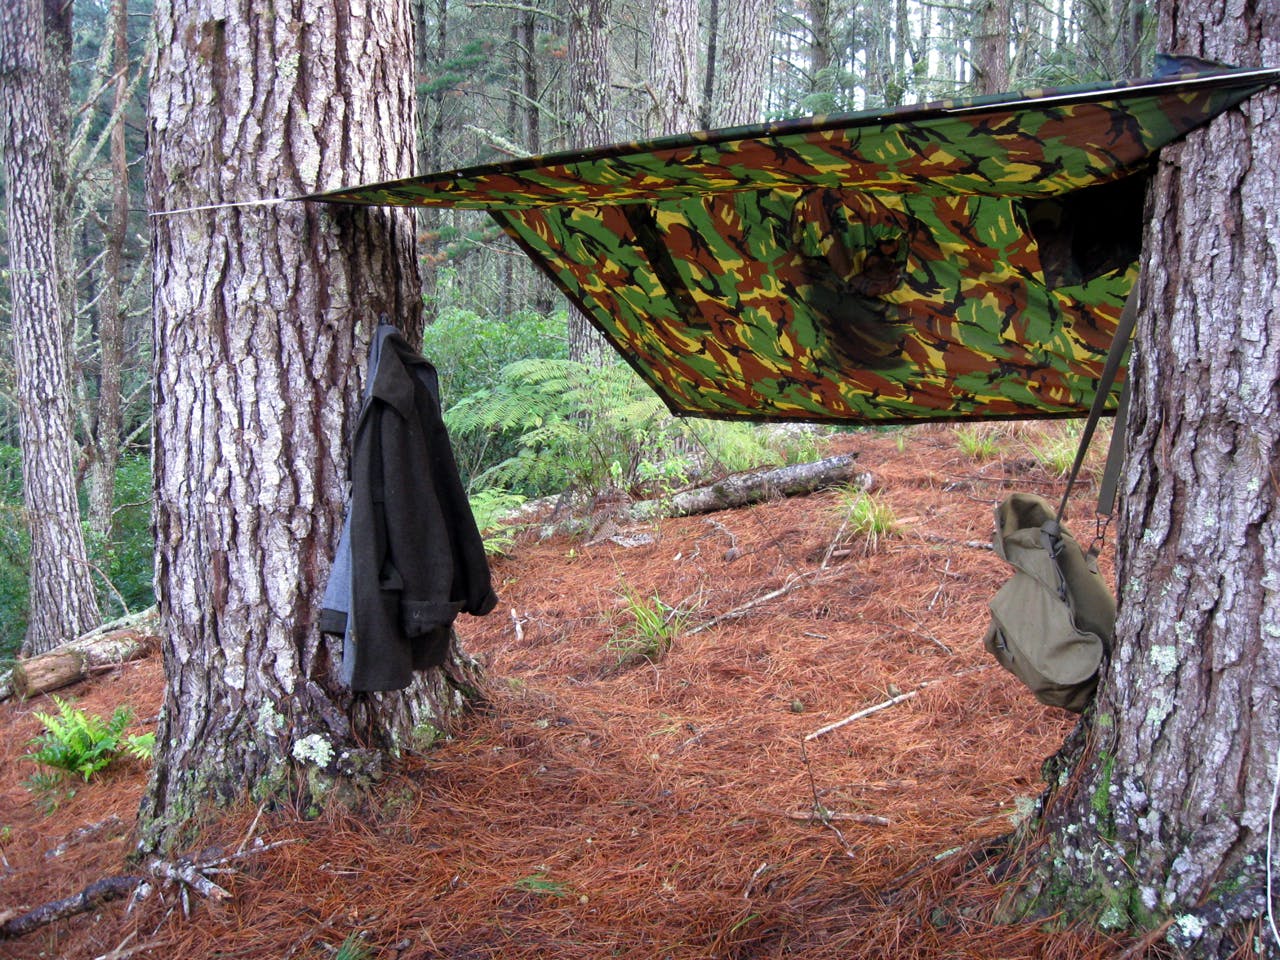 Josh built a shelter with a fire an arm's distance away. Photo: Josh Gale